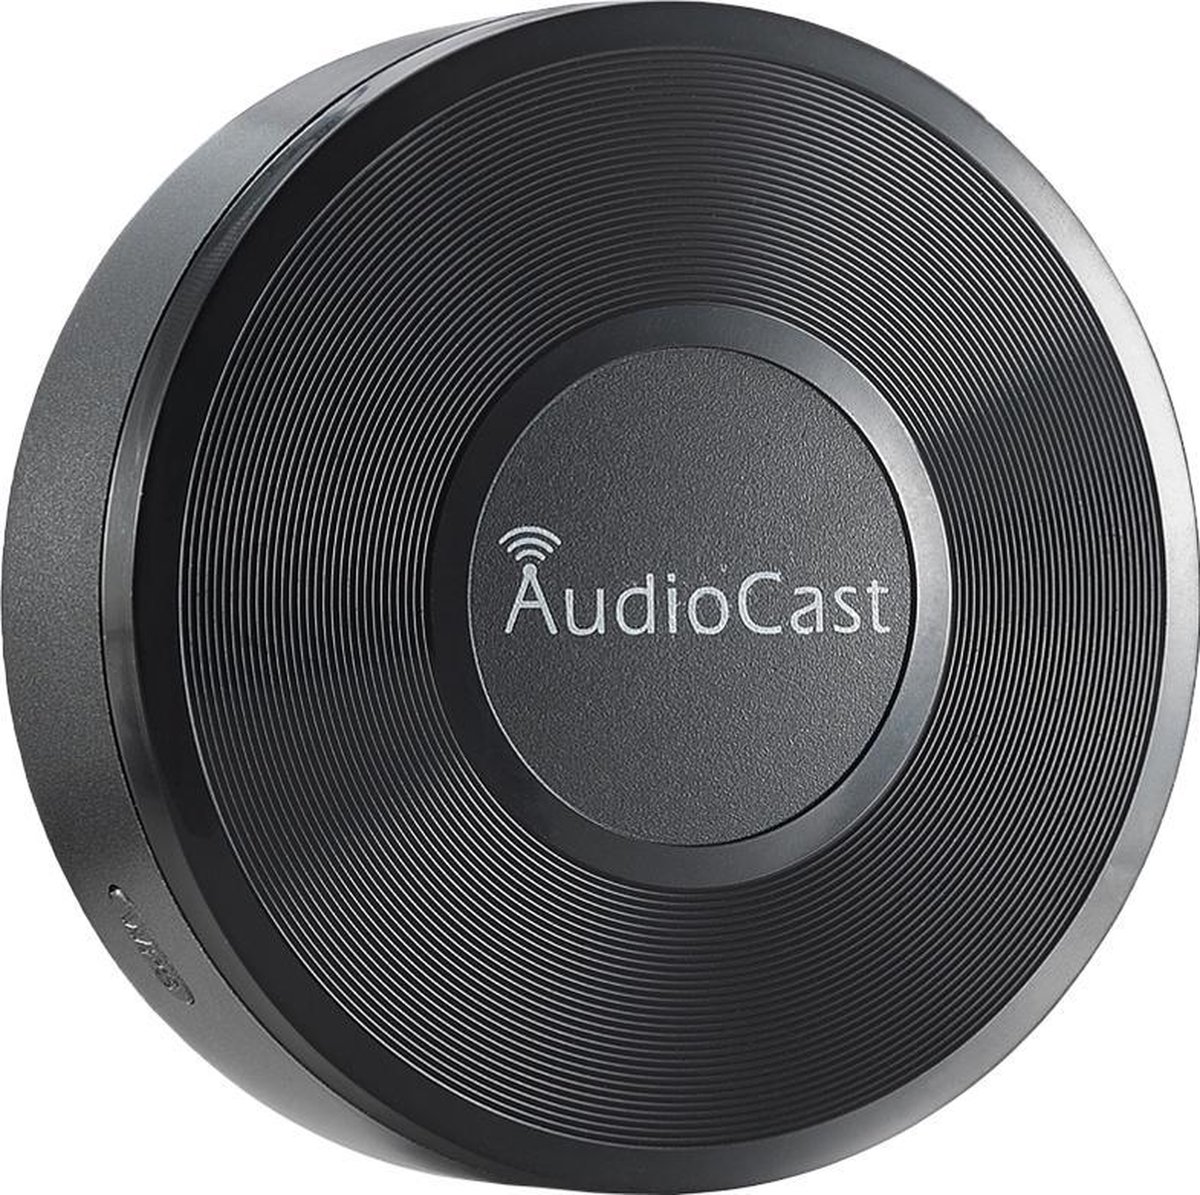 Niet geschikt voor Experiabox v10a router, vereist 2.4ghz) iEAST AudioCast audio streamer review